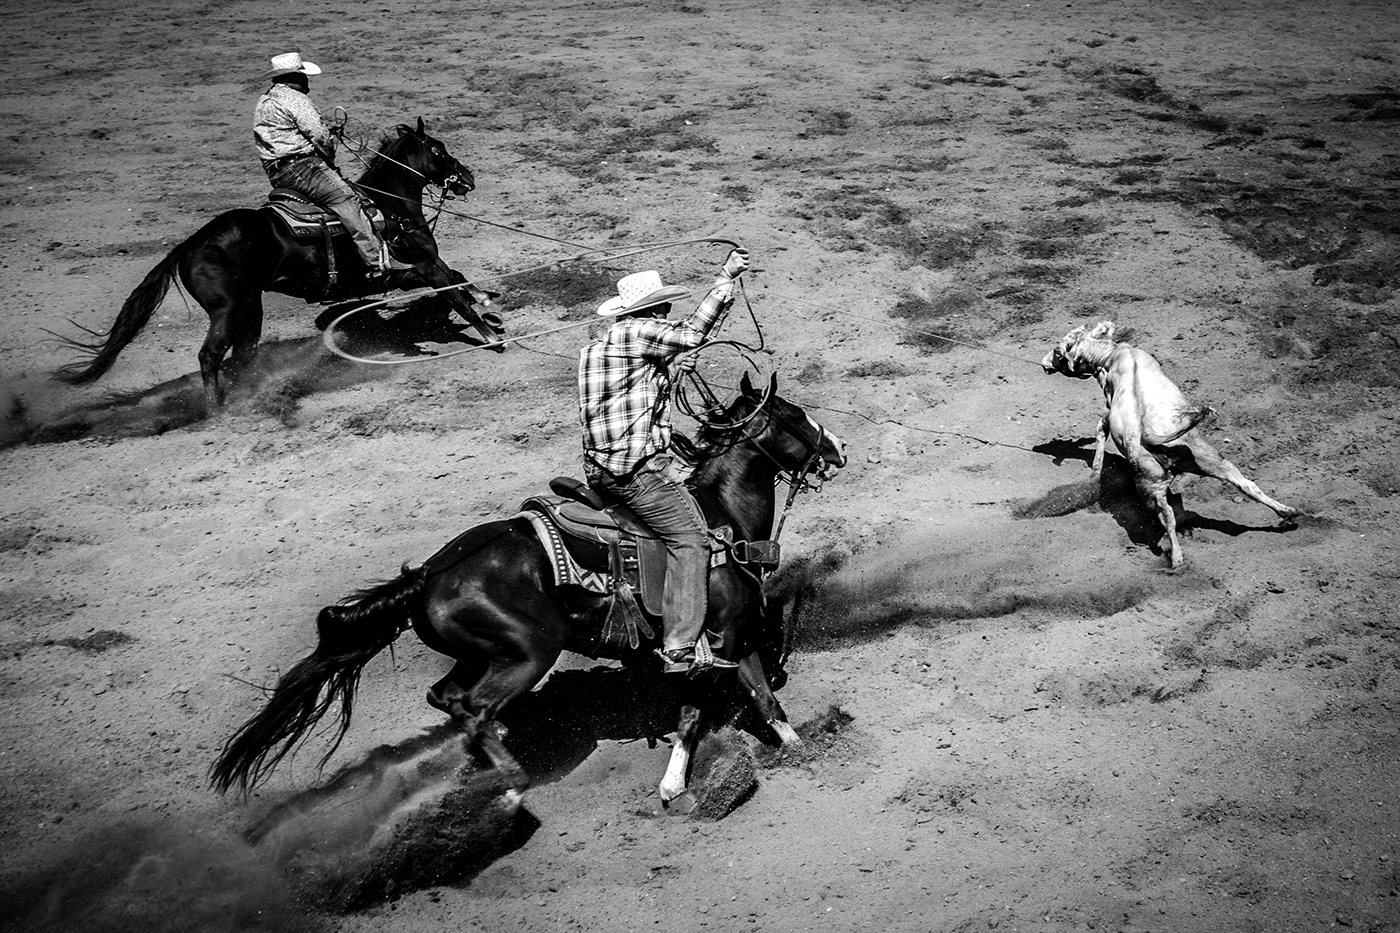 rodeo TeamRoping animals horses bulls Arena ropes people COWBOYS